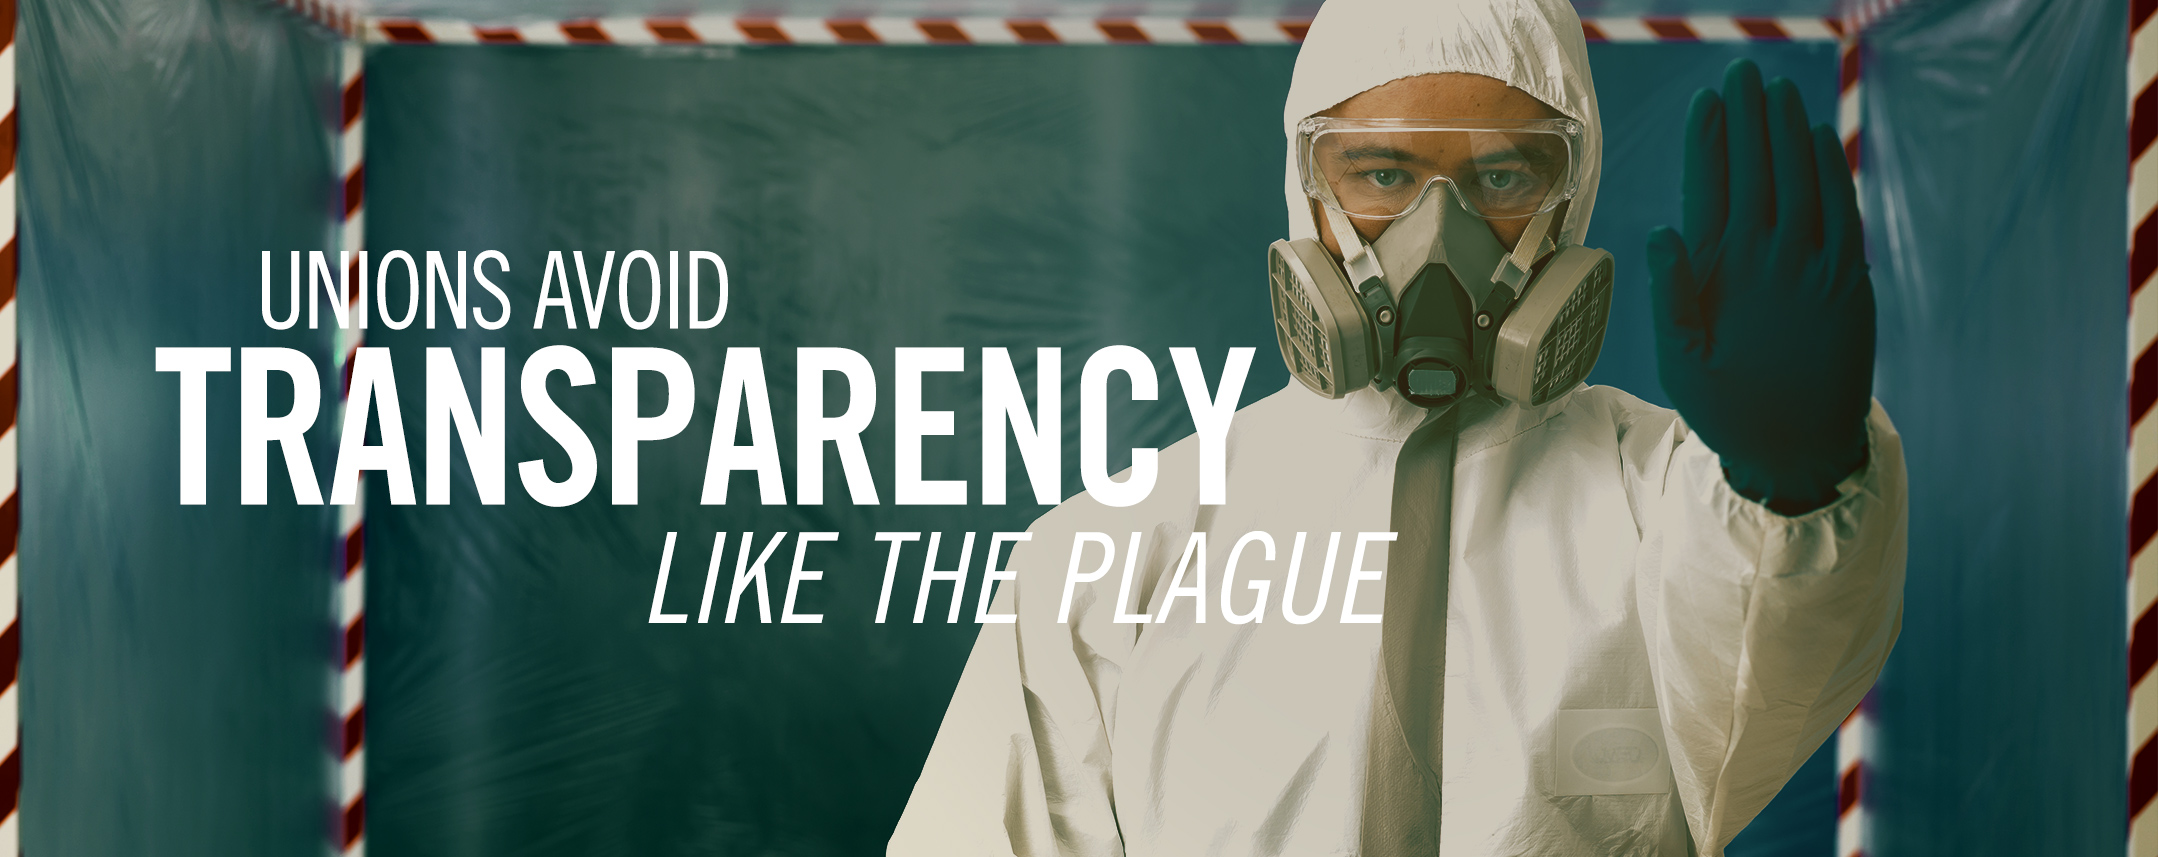 Transparency-Plague-FEATURED.jpg